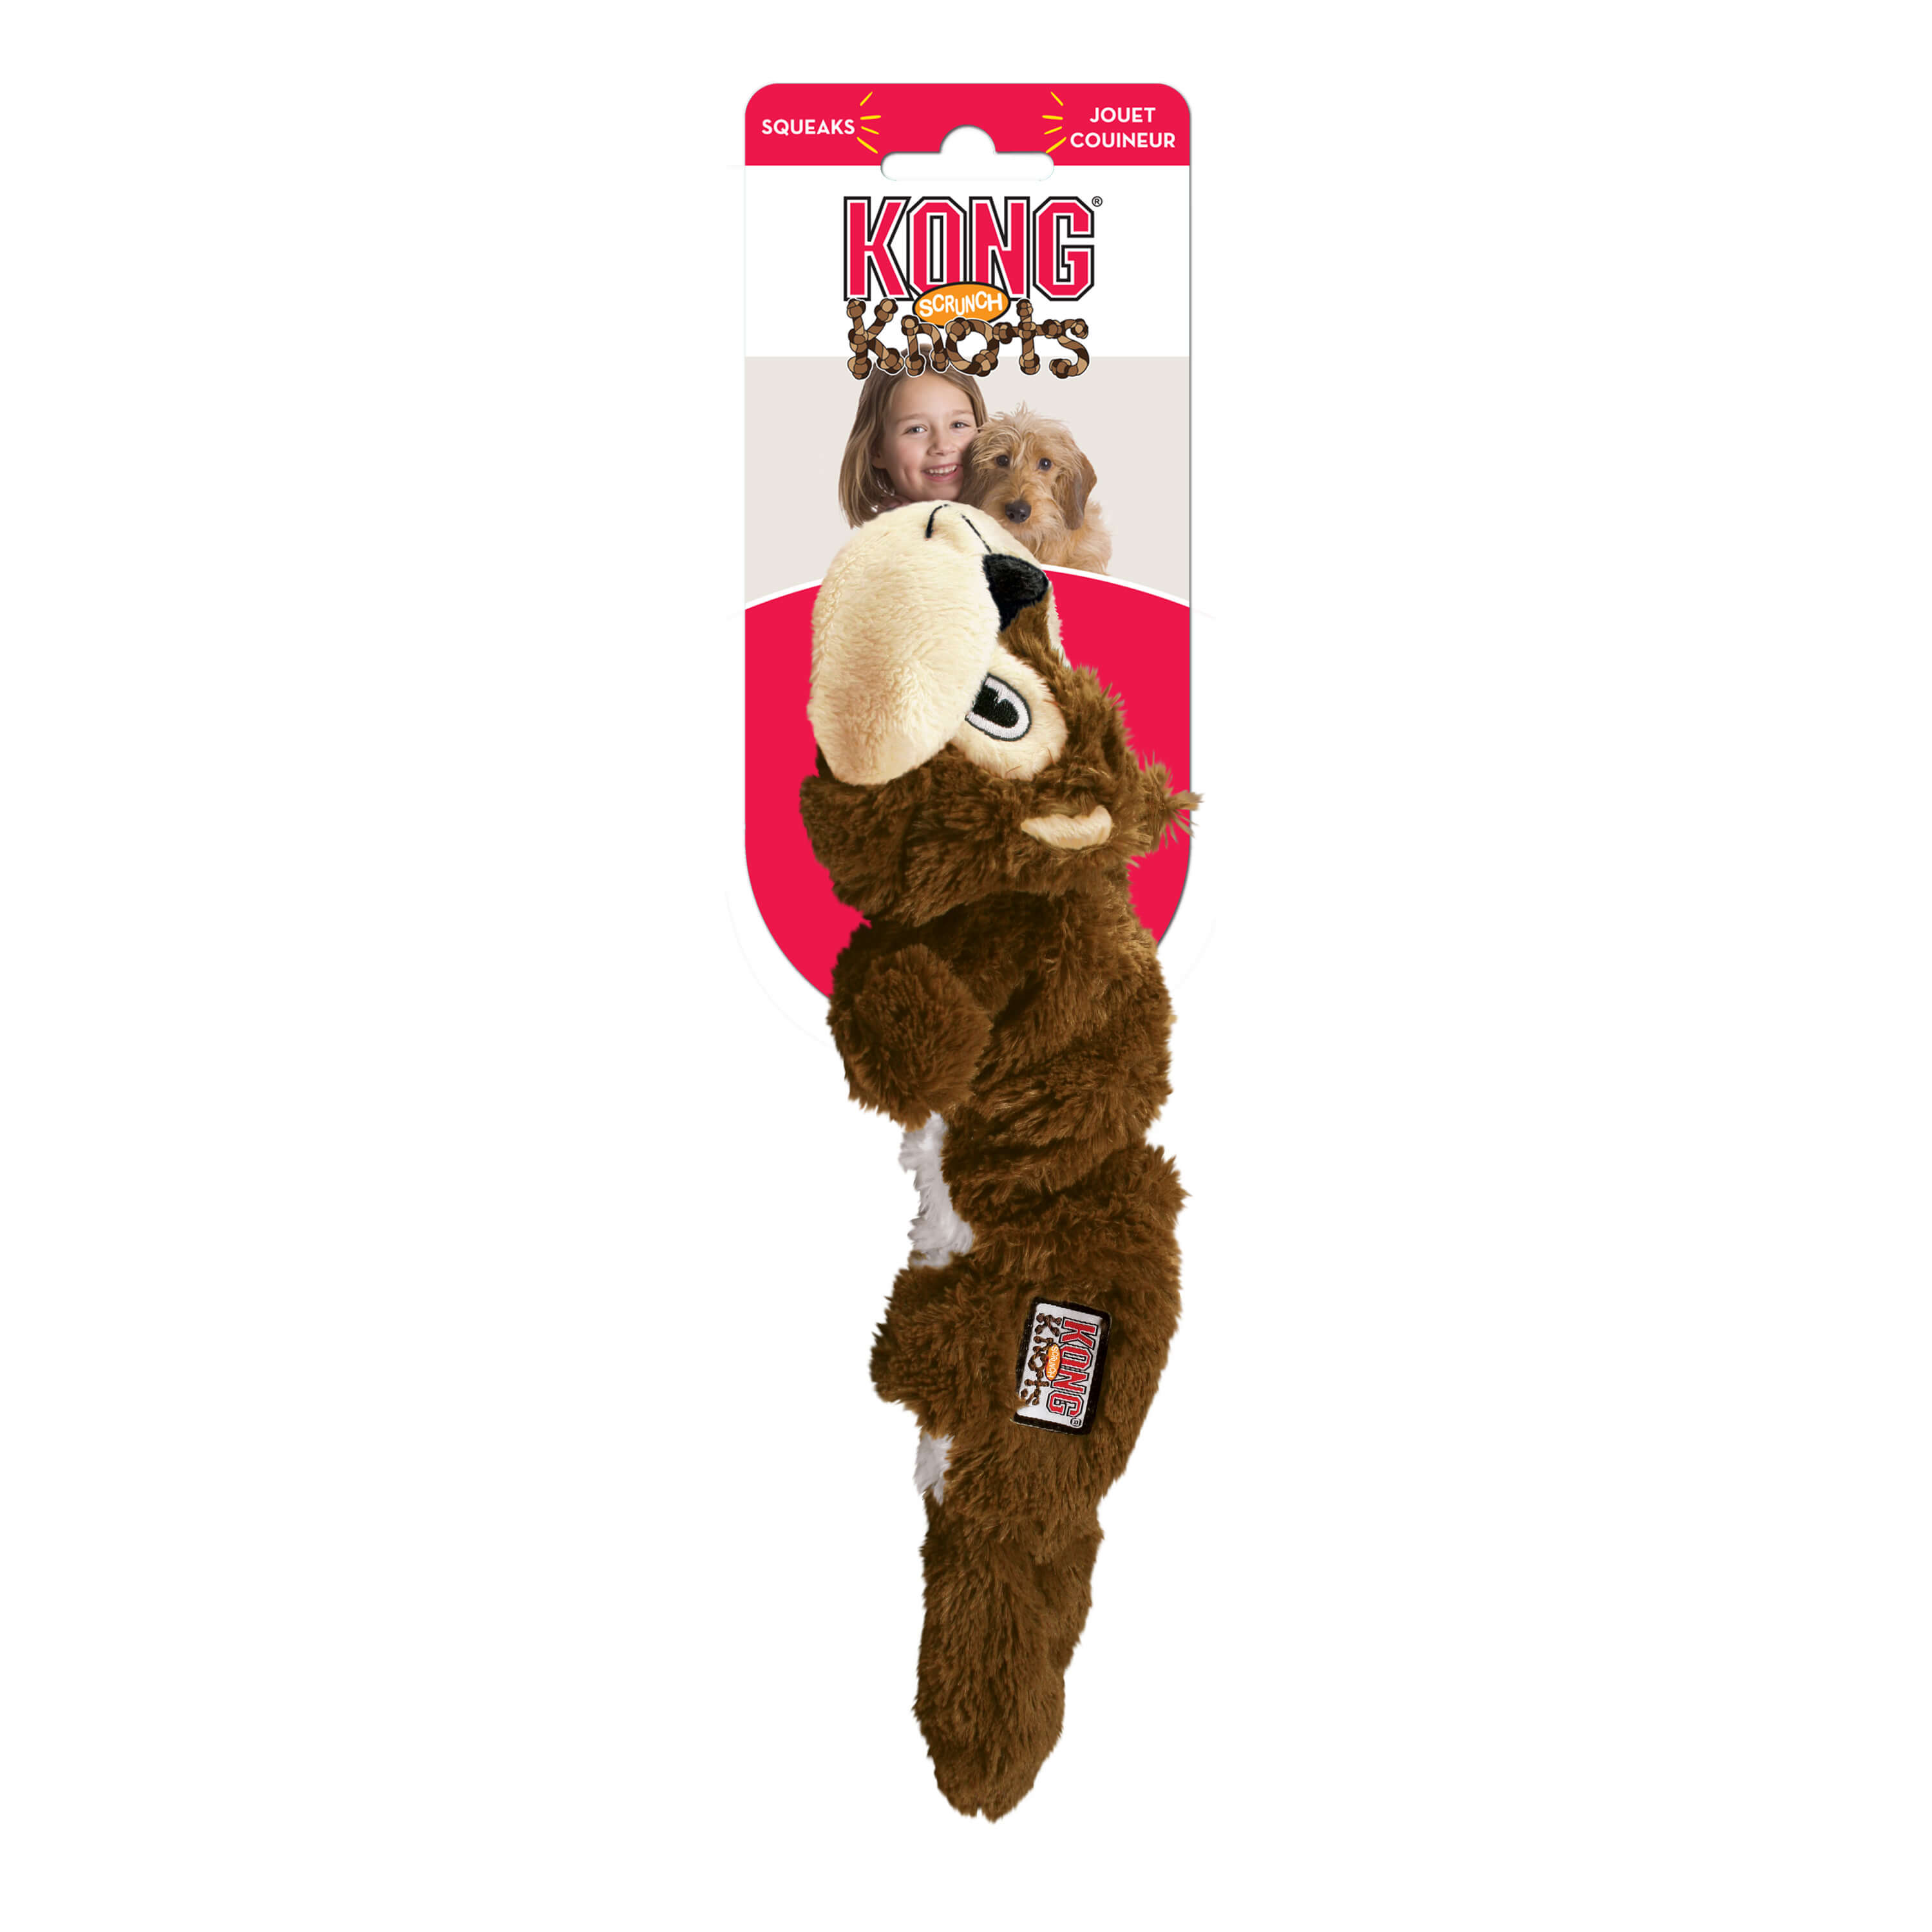 Kong dog toy - scrunch knots squirrel